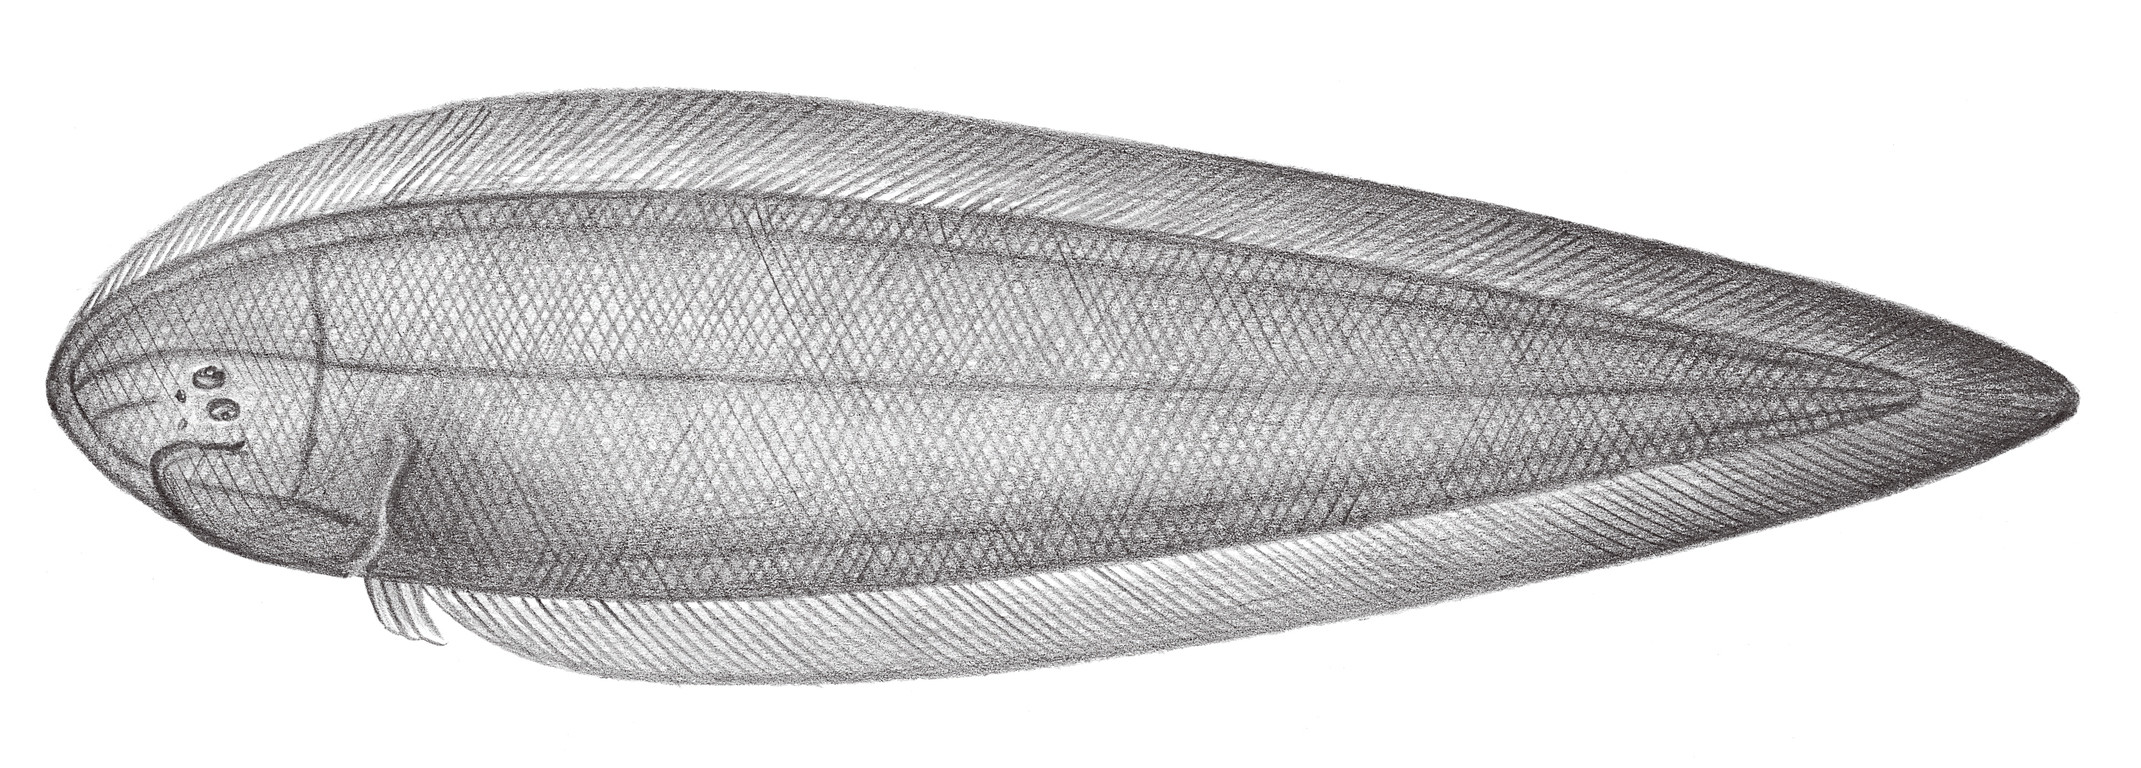 2456.	窄體舌鰨 Cynoglossus gracilis Günther, 1873